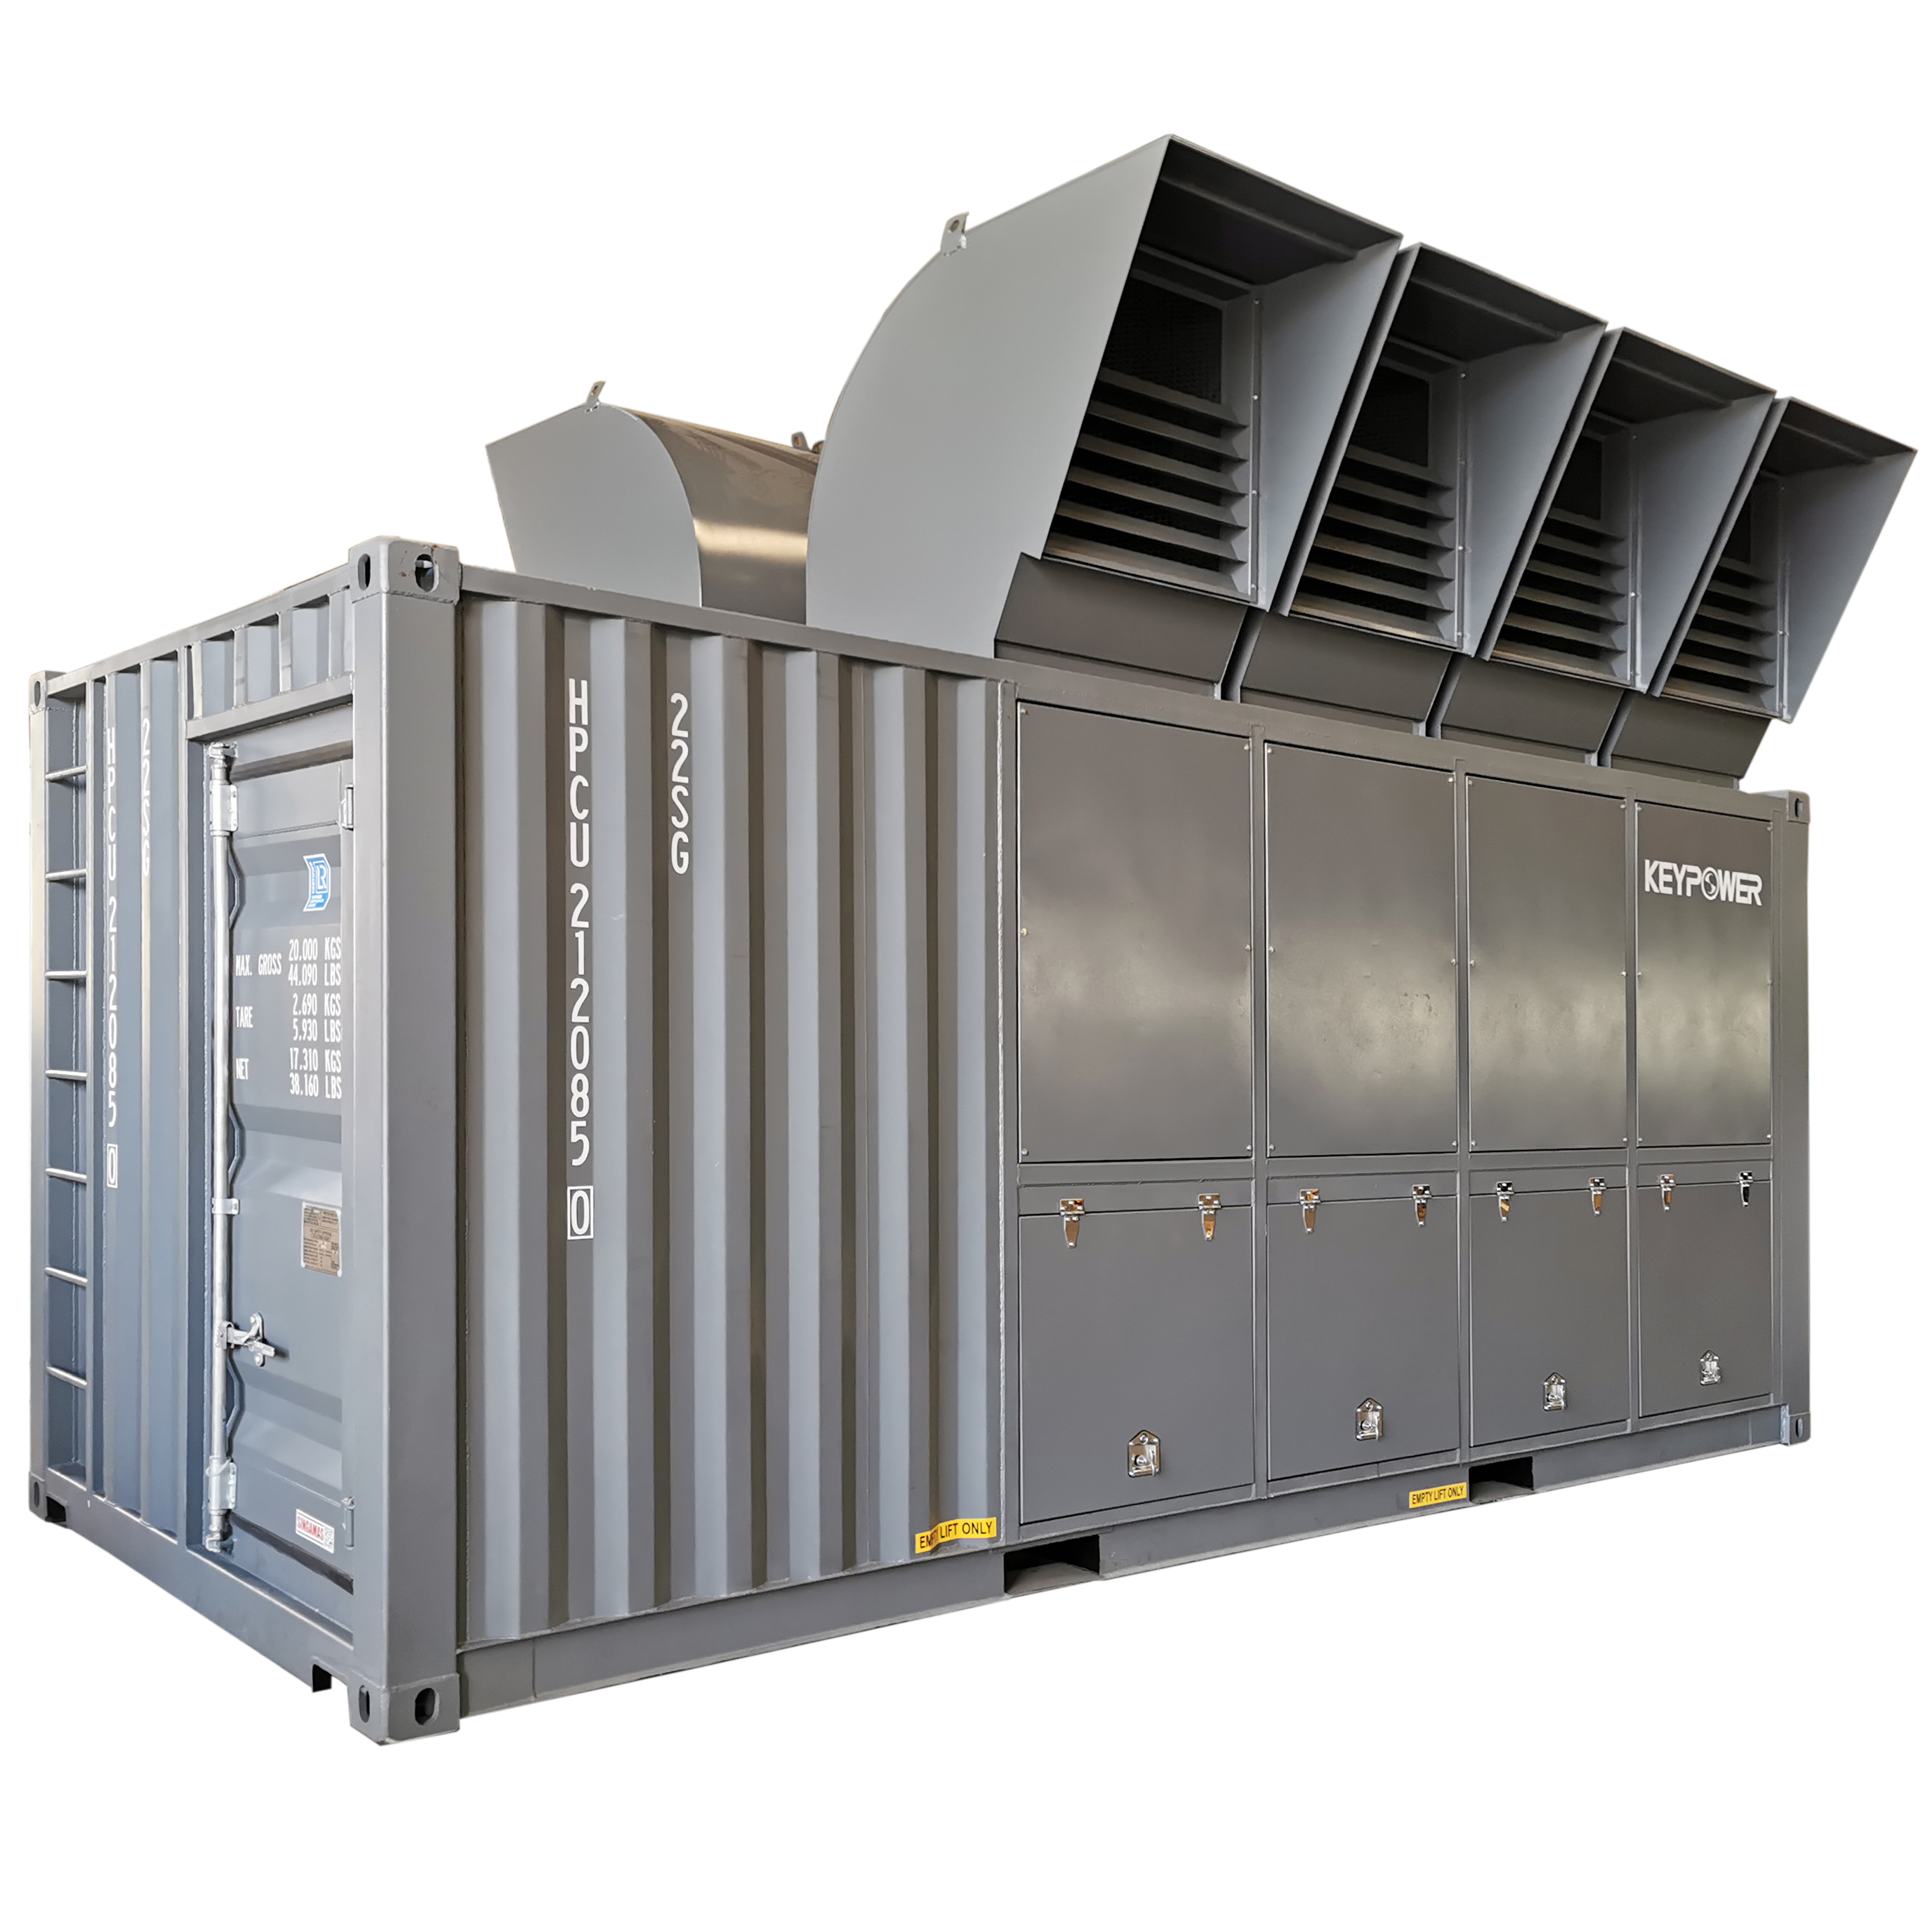 2019 wholesale price 500 Kw Resistive Load Bank Manufacturer - KEYPOWER 2400kW Resistive Load Bank For Generator Testing – Gff Keypower